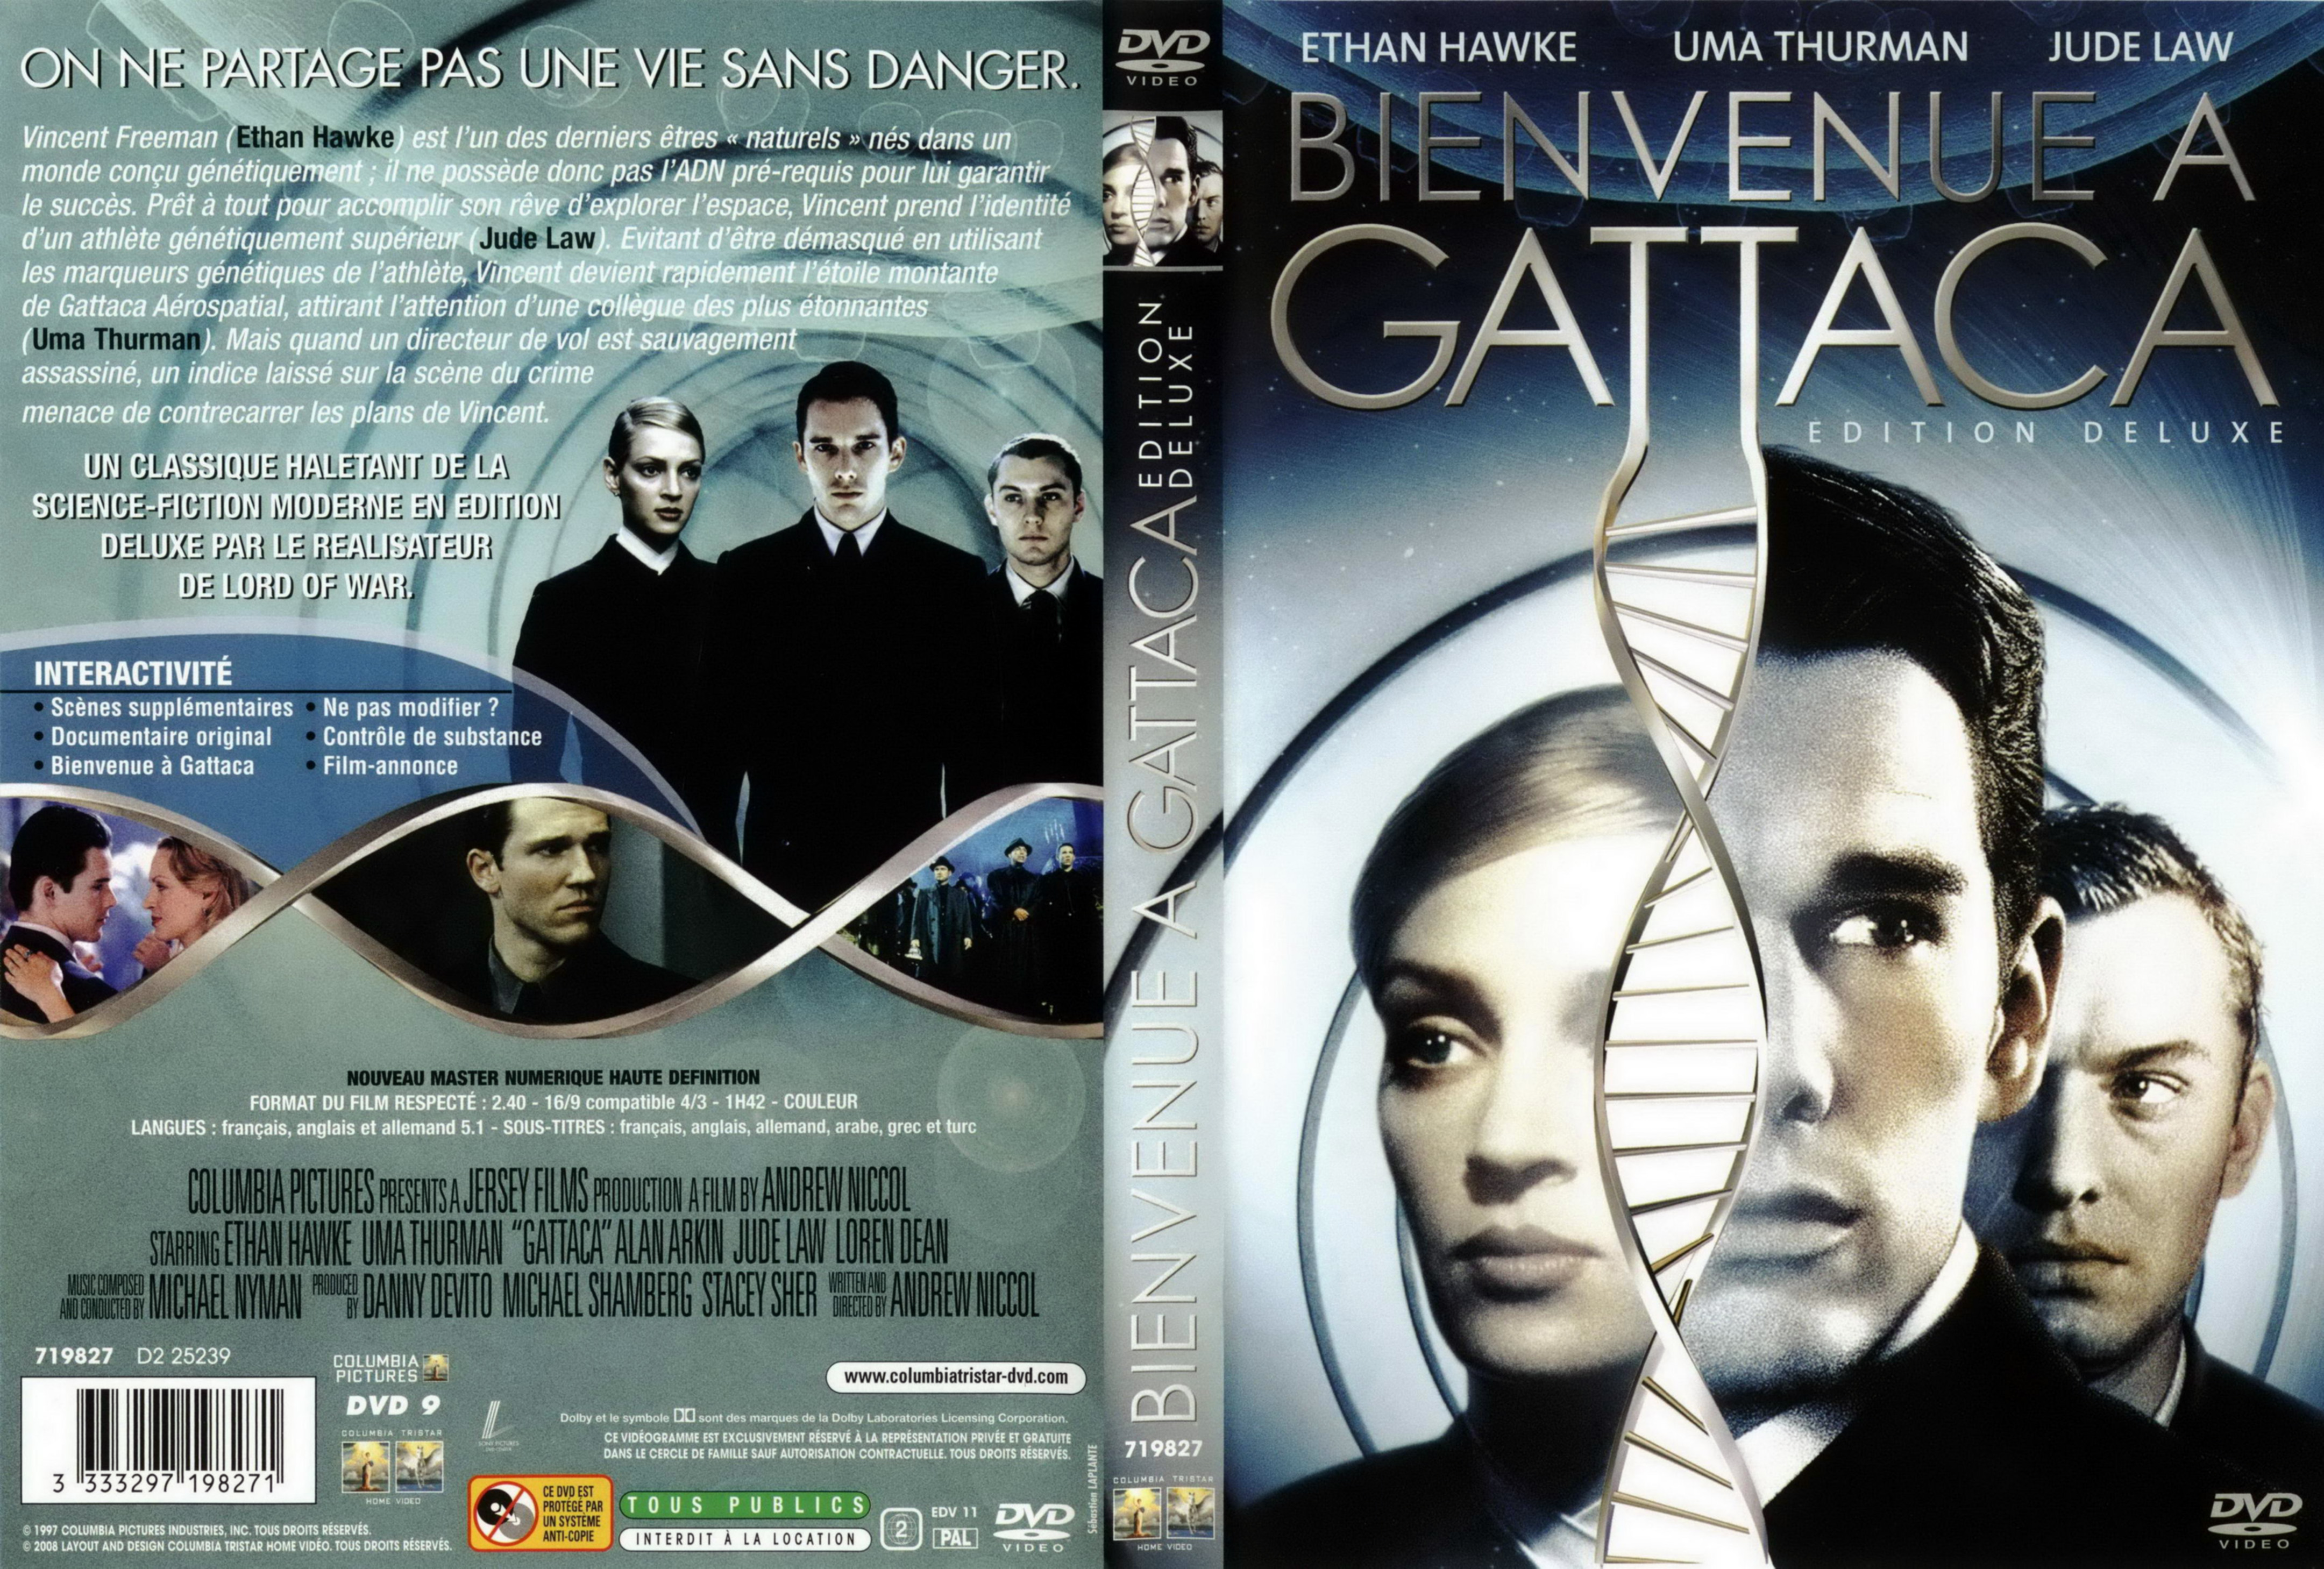 Jaquette DVD Bienvenue  Gattaca v4